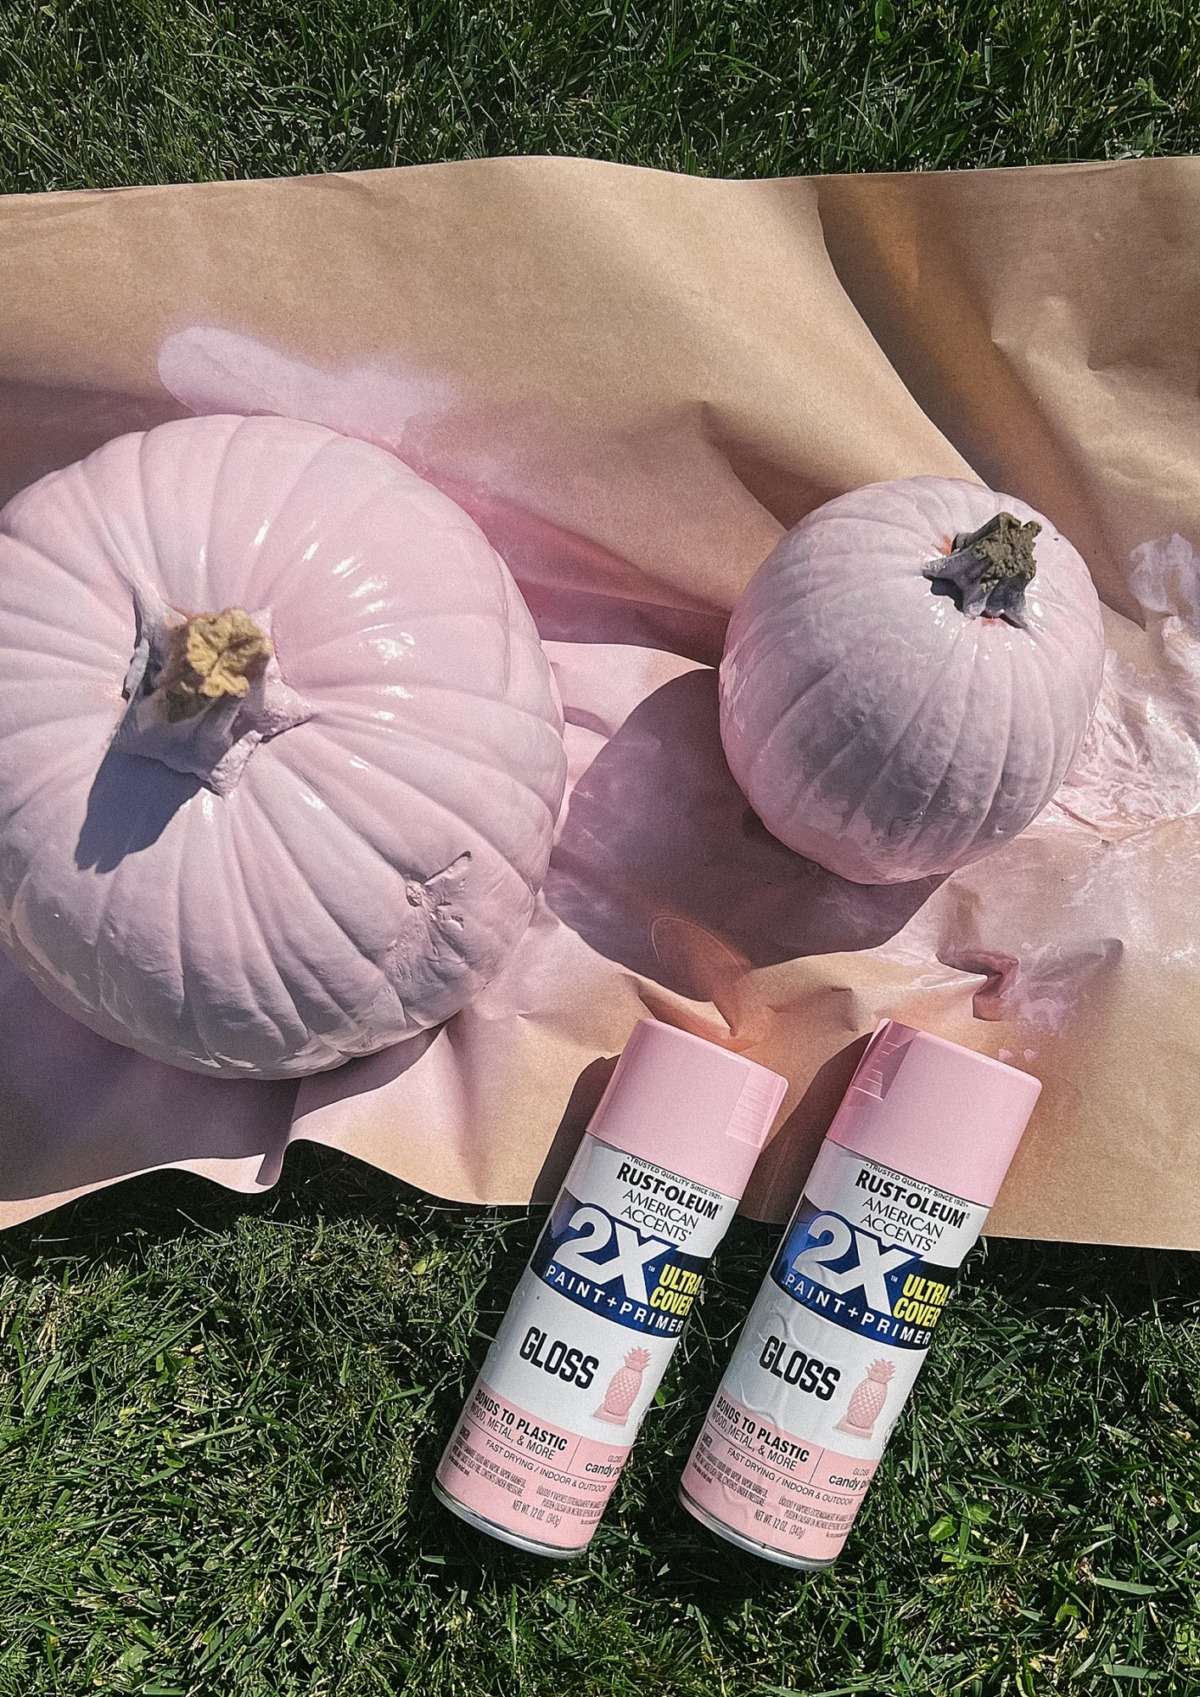 Pumpkins sprayed with pink paint